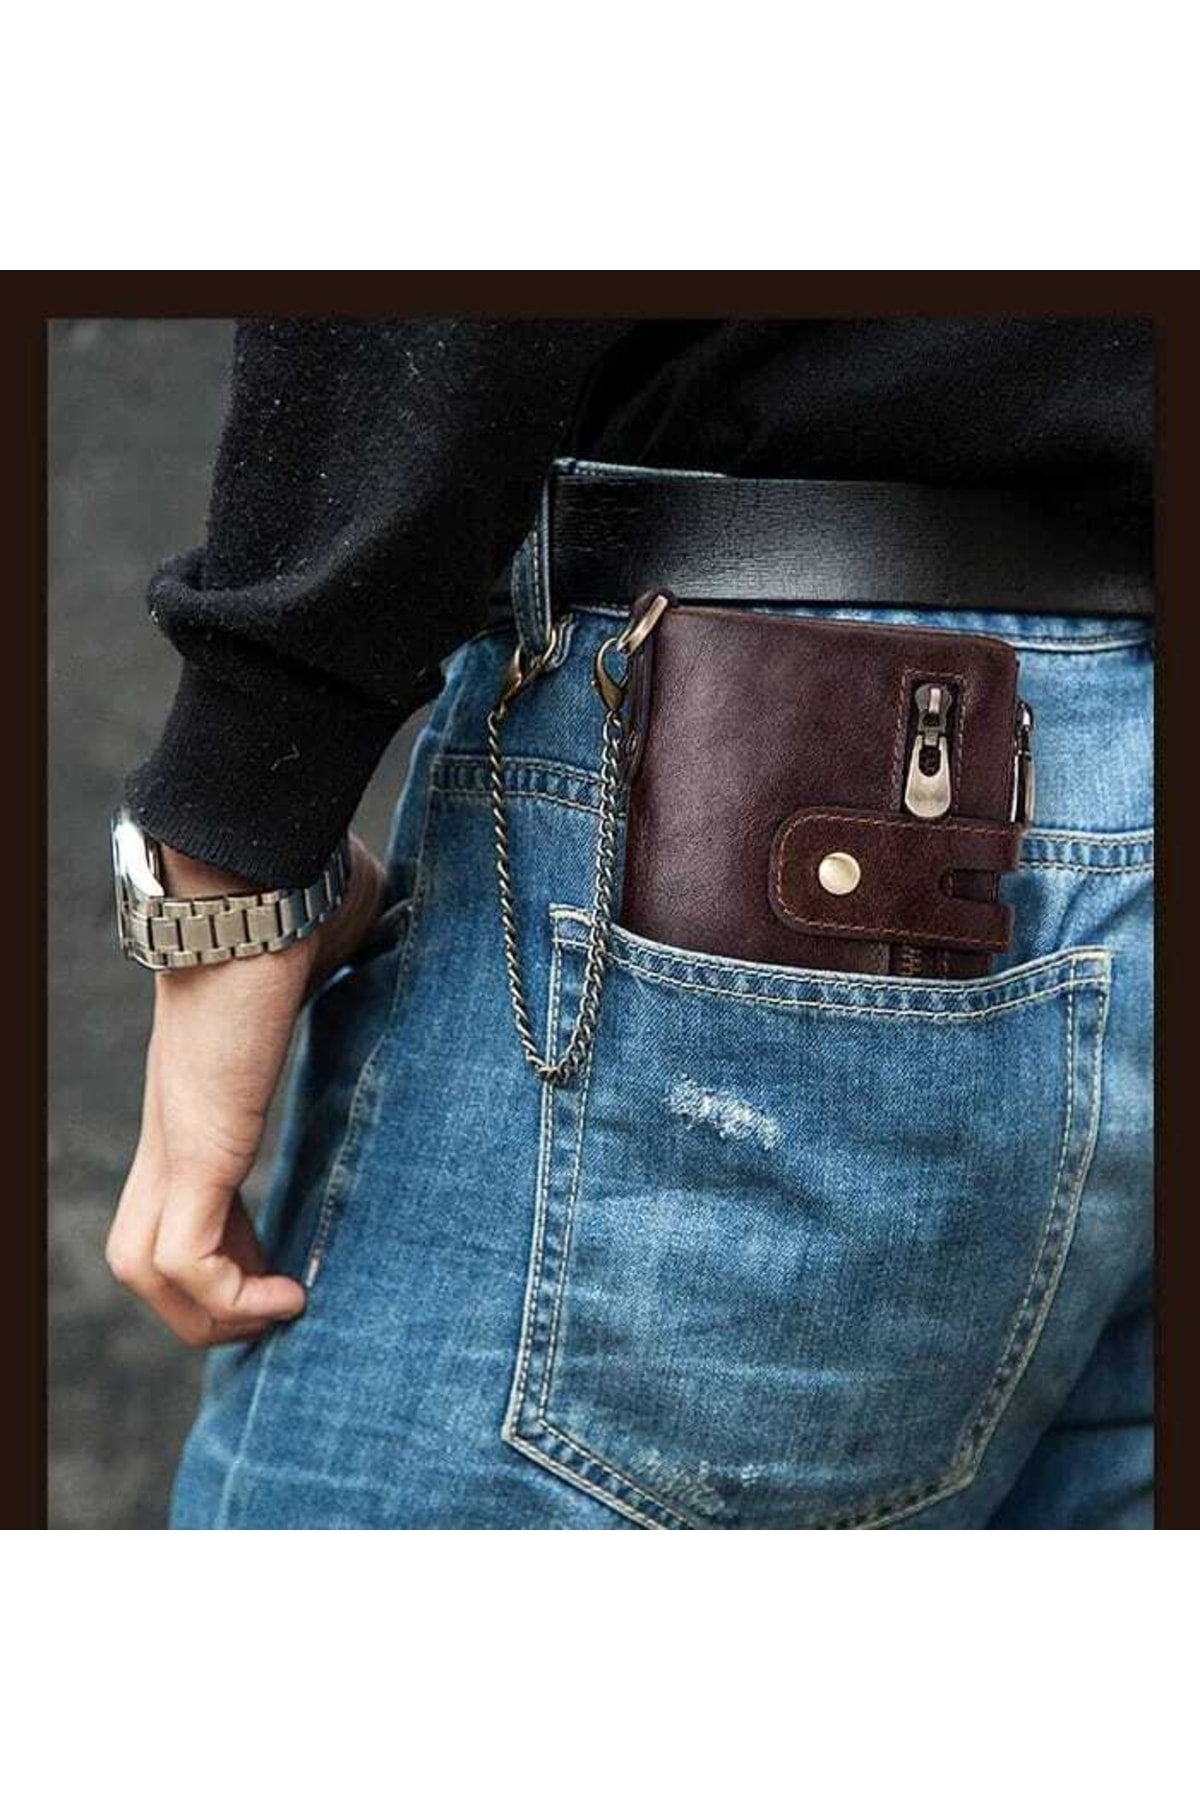 Men's Brown Leather Wallet